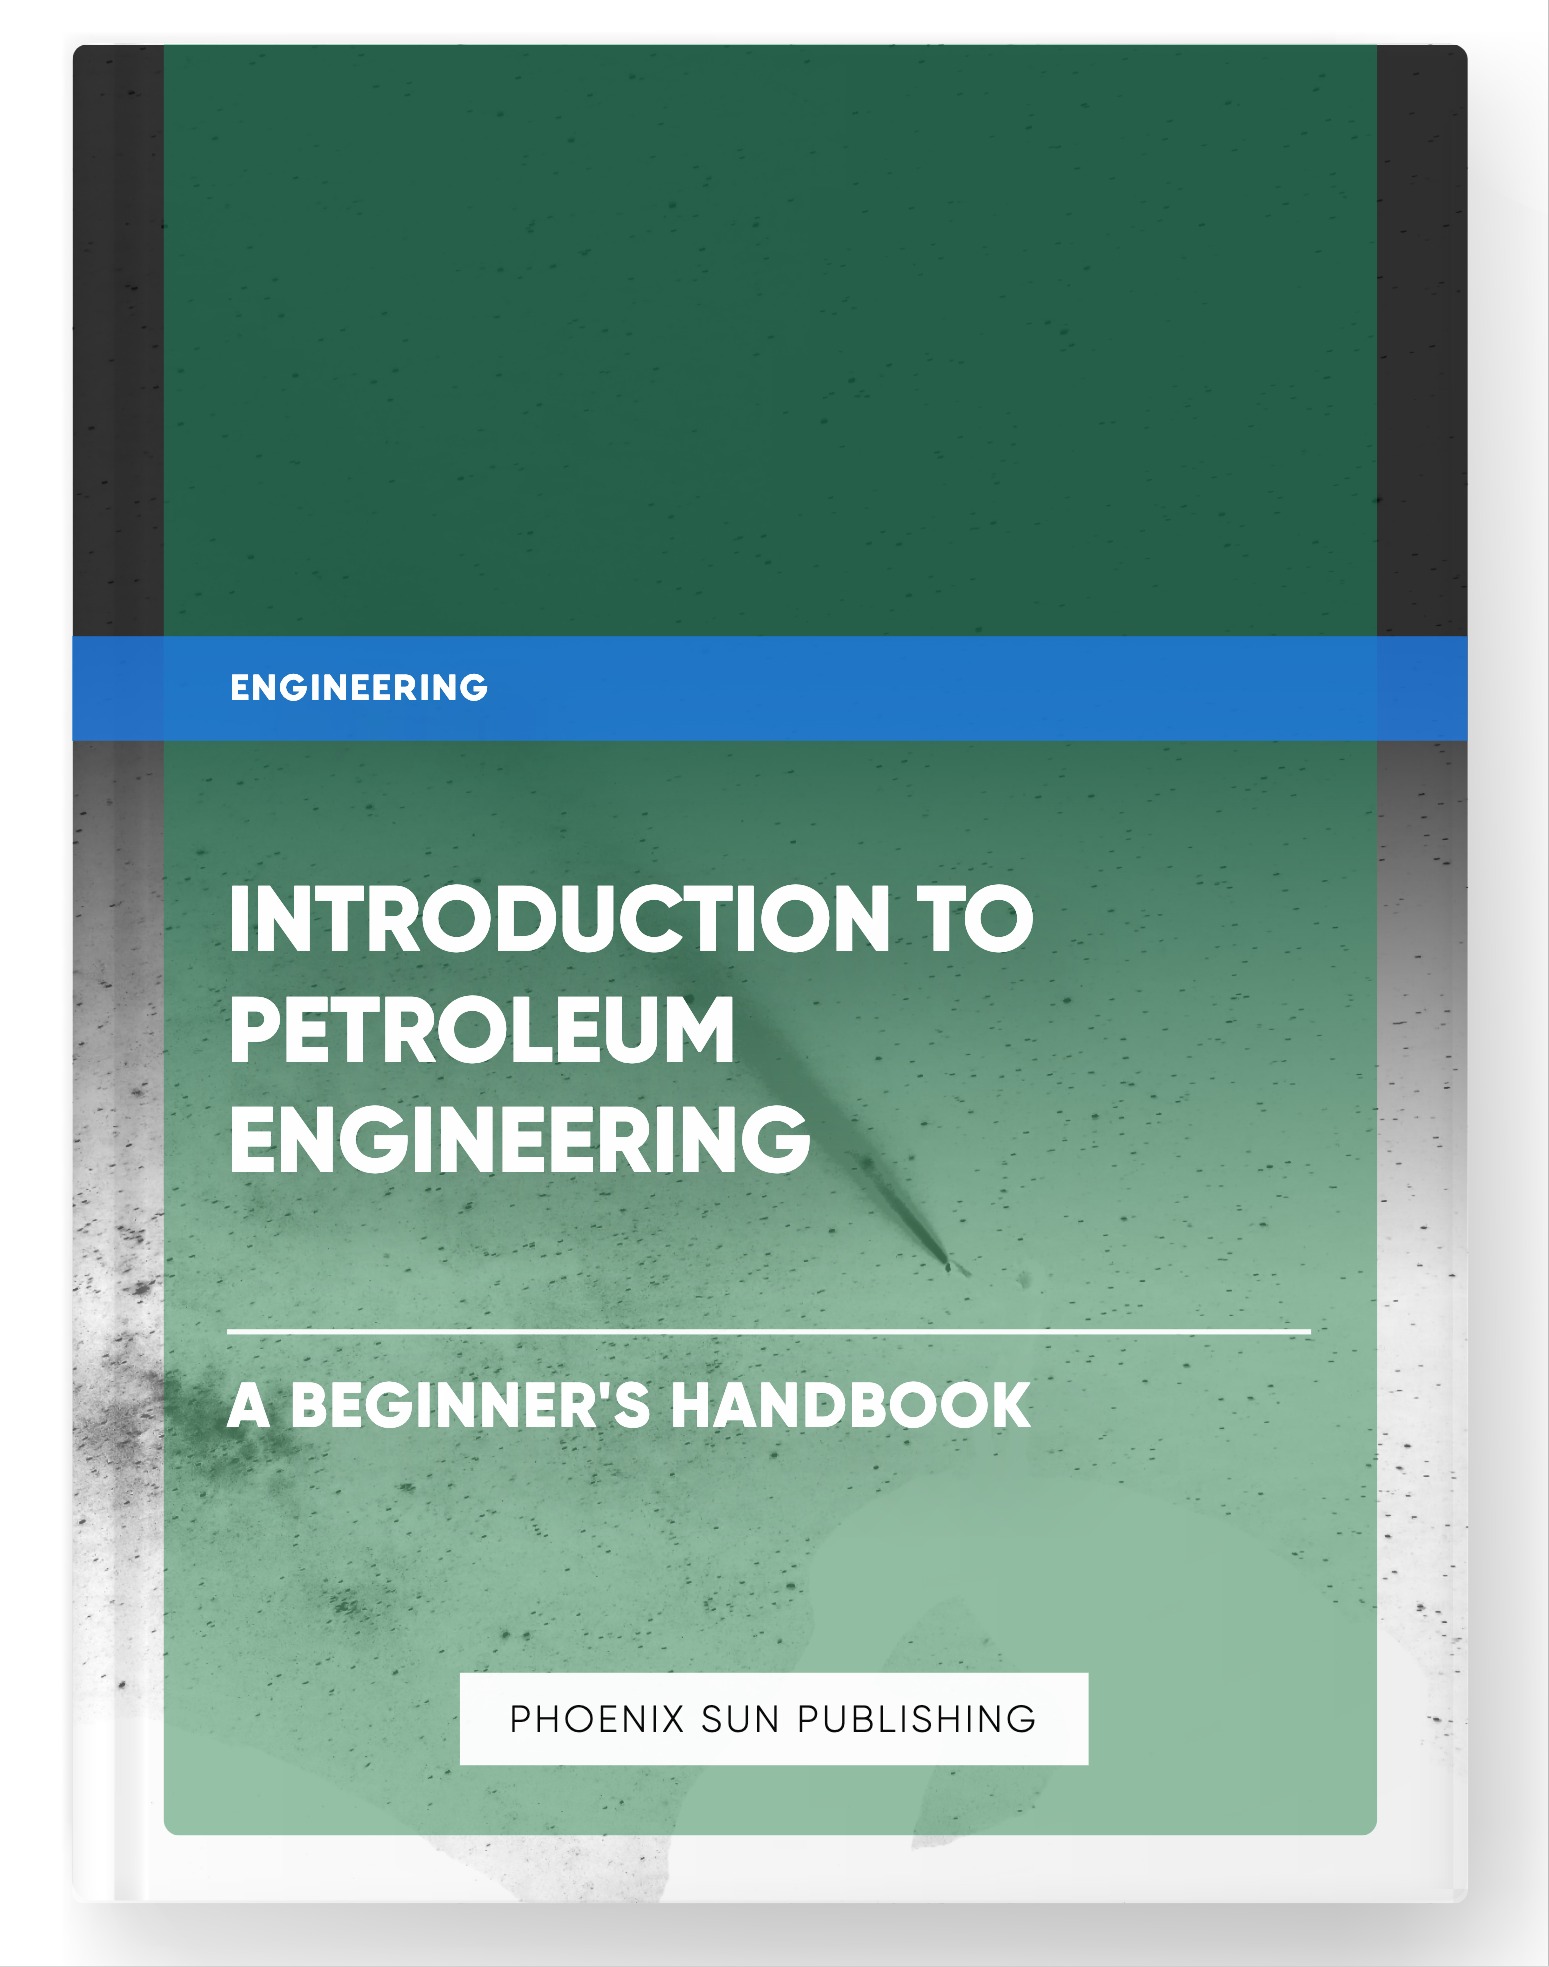 Introduction to Petroleum Engineering – A Beginner’s Handbook